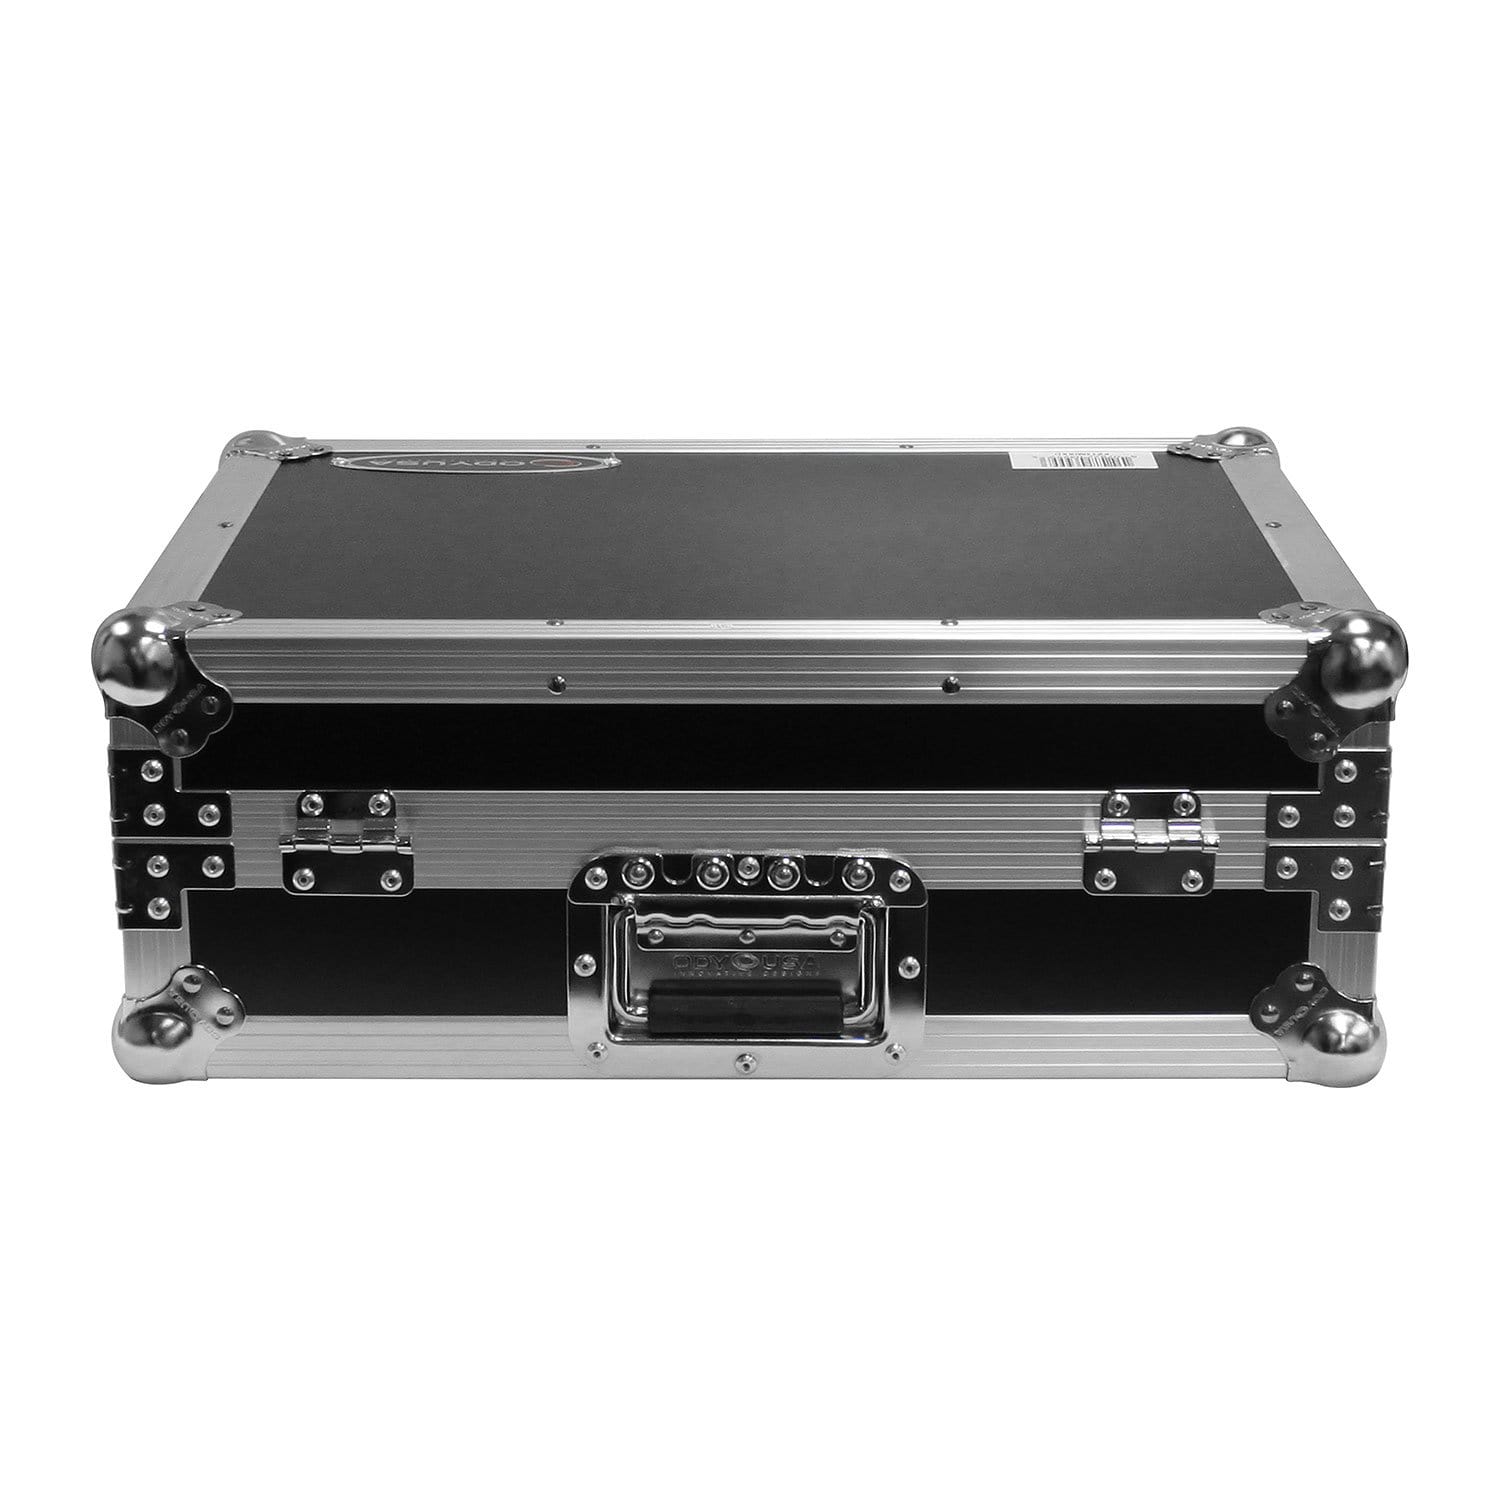 Odyssey FZ12MIXXD Universal 12" Format DJ Mixer Case - PSSL ProSound and Stage Lighting